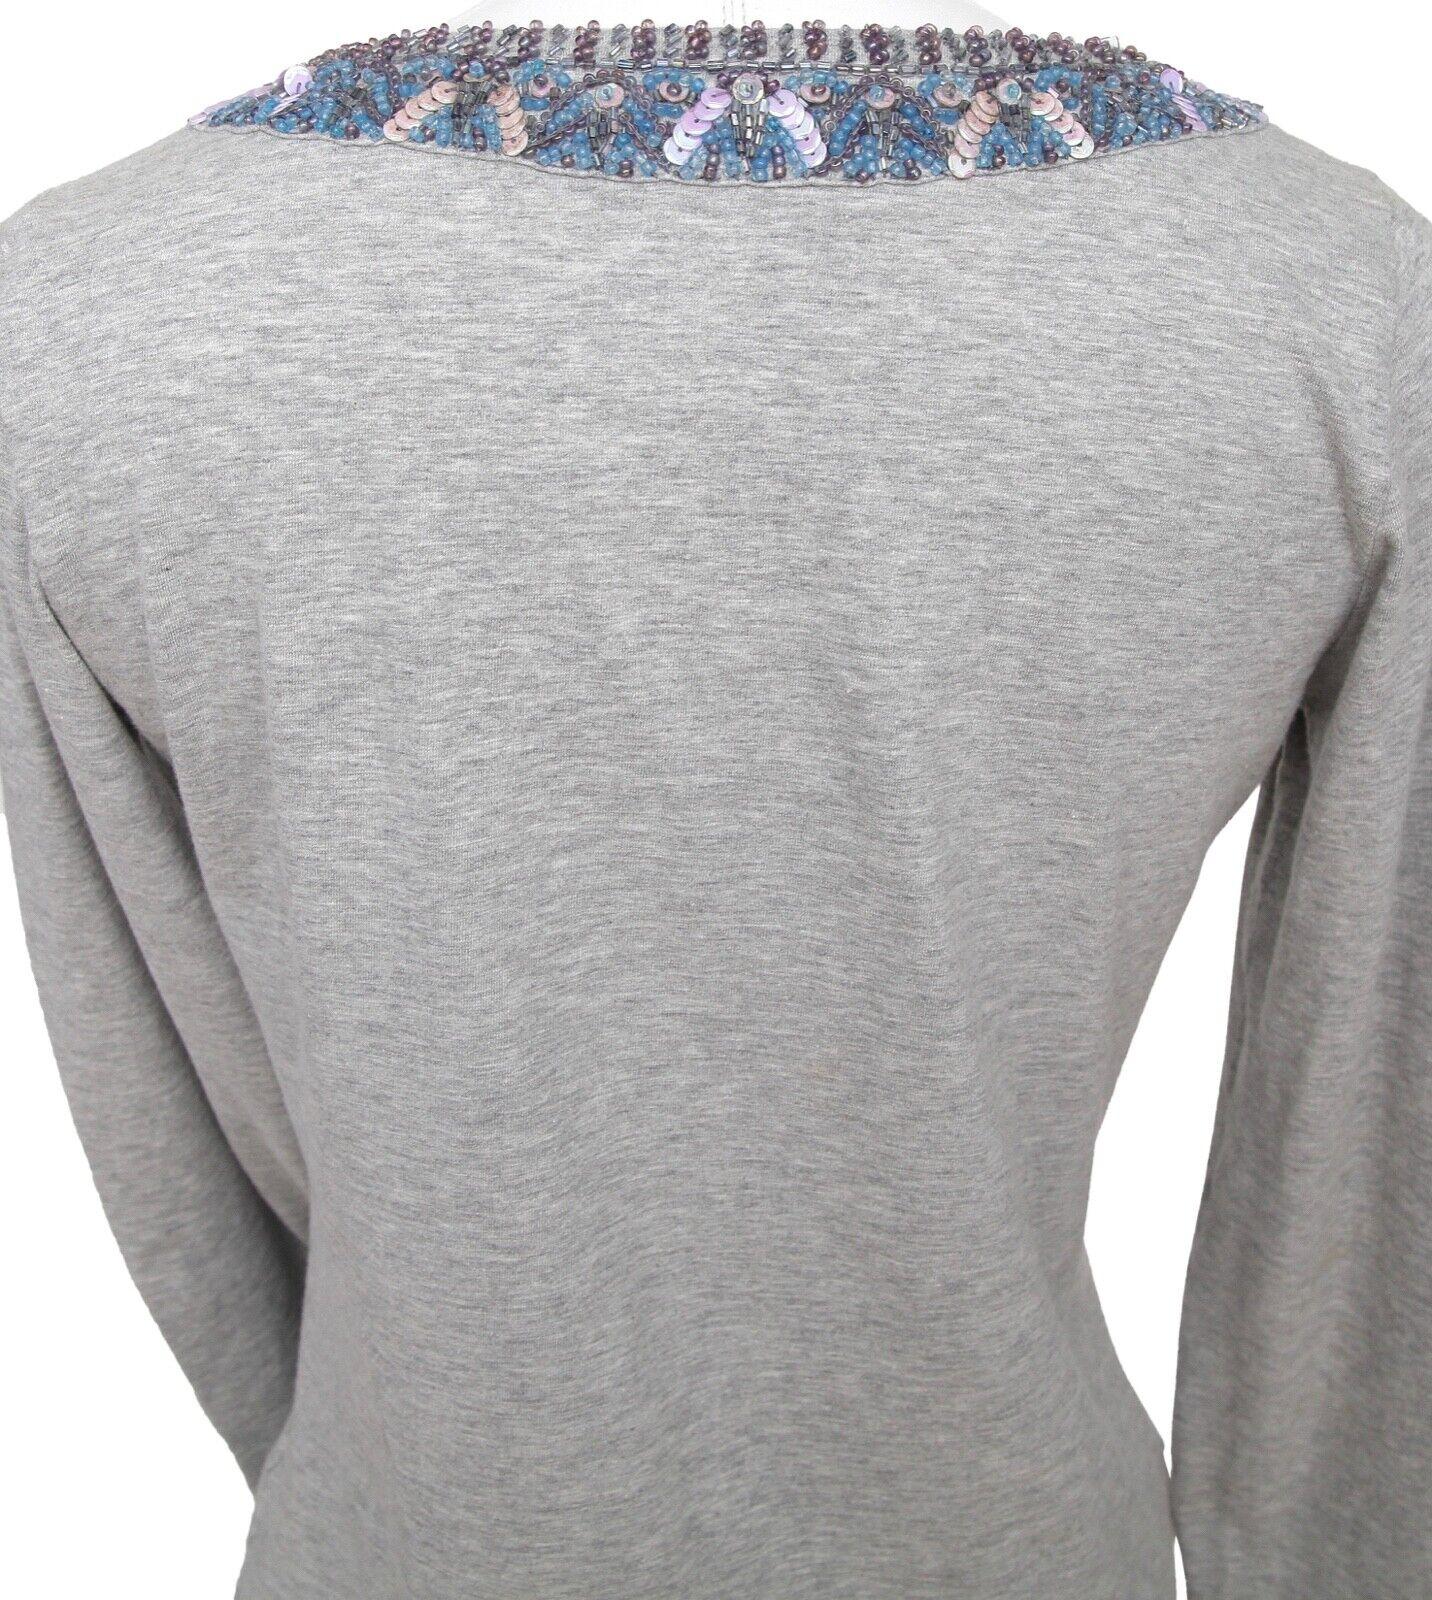 ETRO Top Shirt T-Shirt Grey Beads Sequin V-neck Long Sleeve Cotton Sz 42 For Sale 2